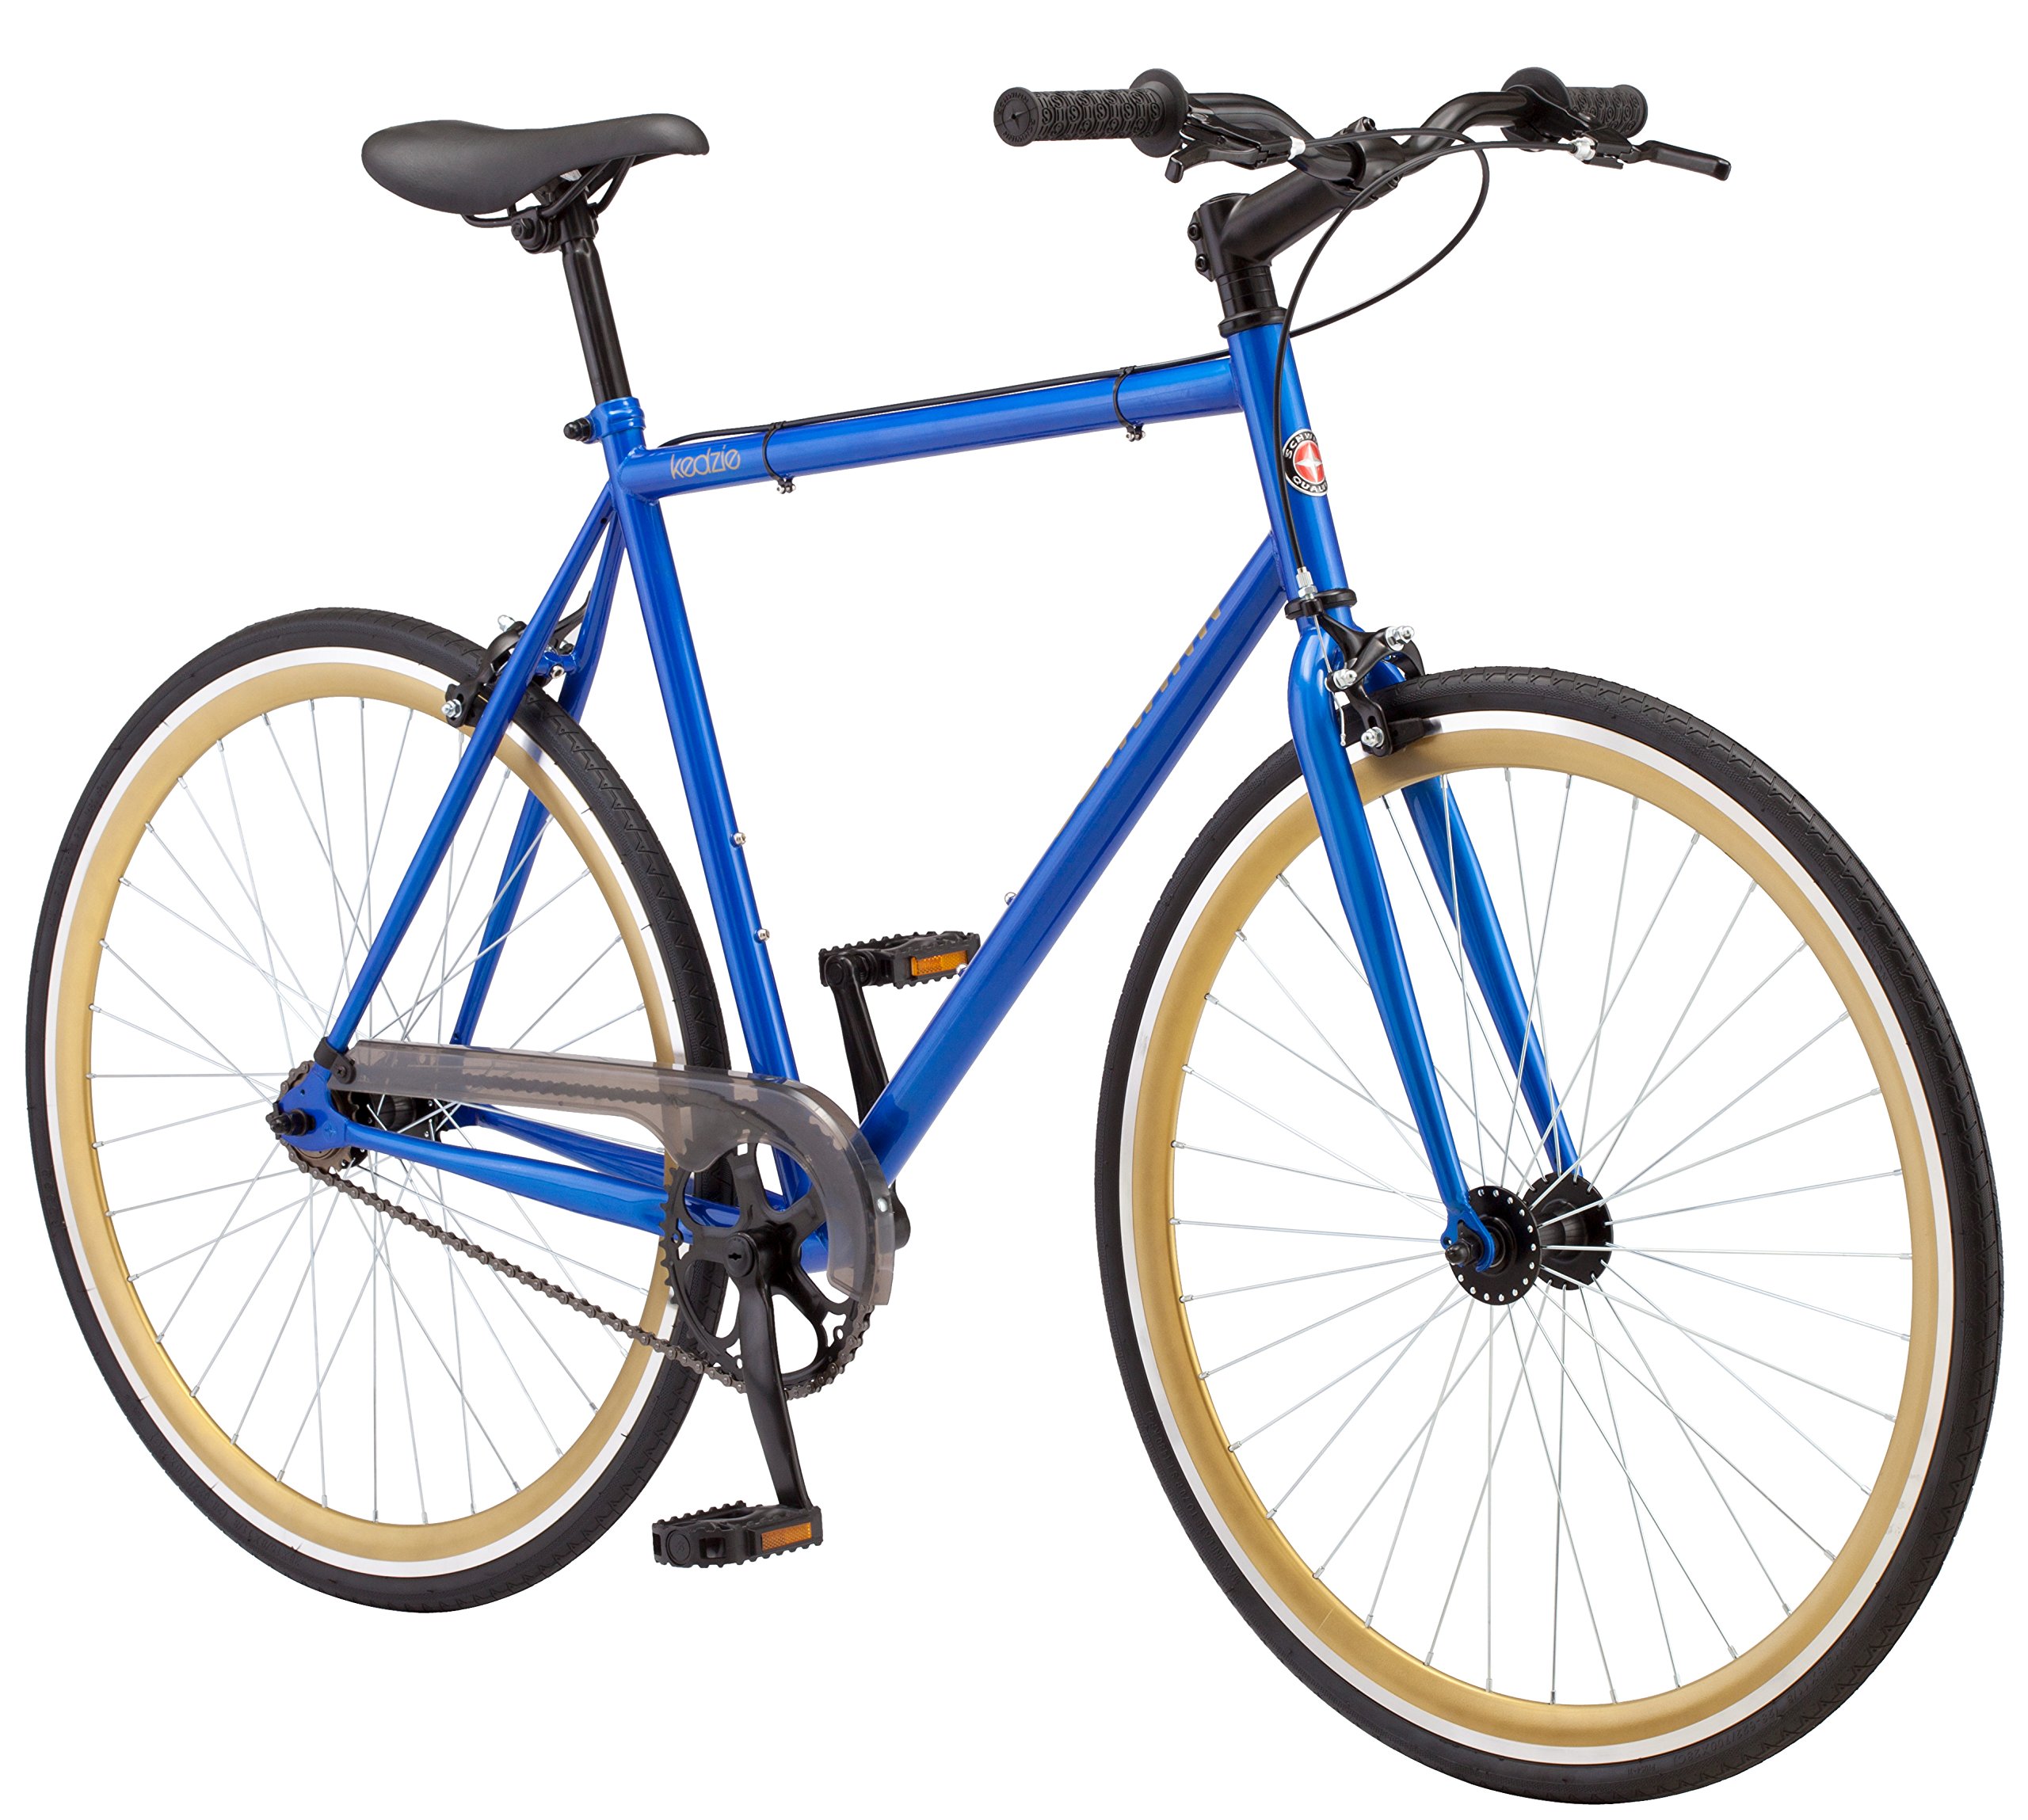 Schwinn Kedzie Single-Speed Fixie Road Bike Lightweight Frame for City Riding28 inches Blue